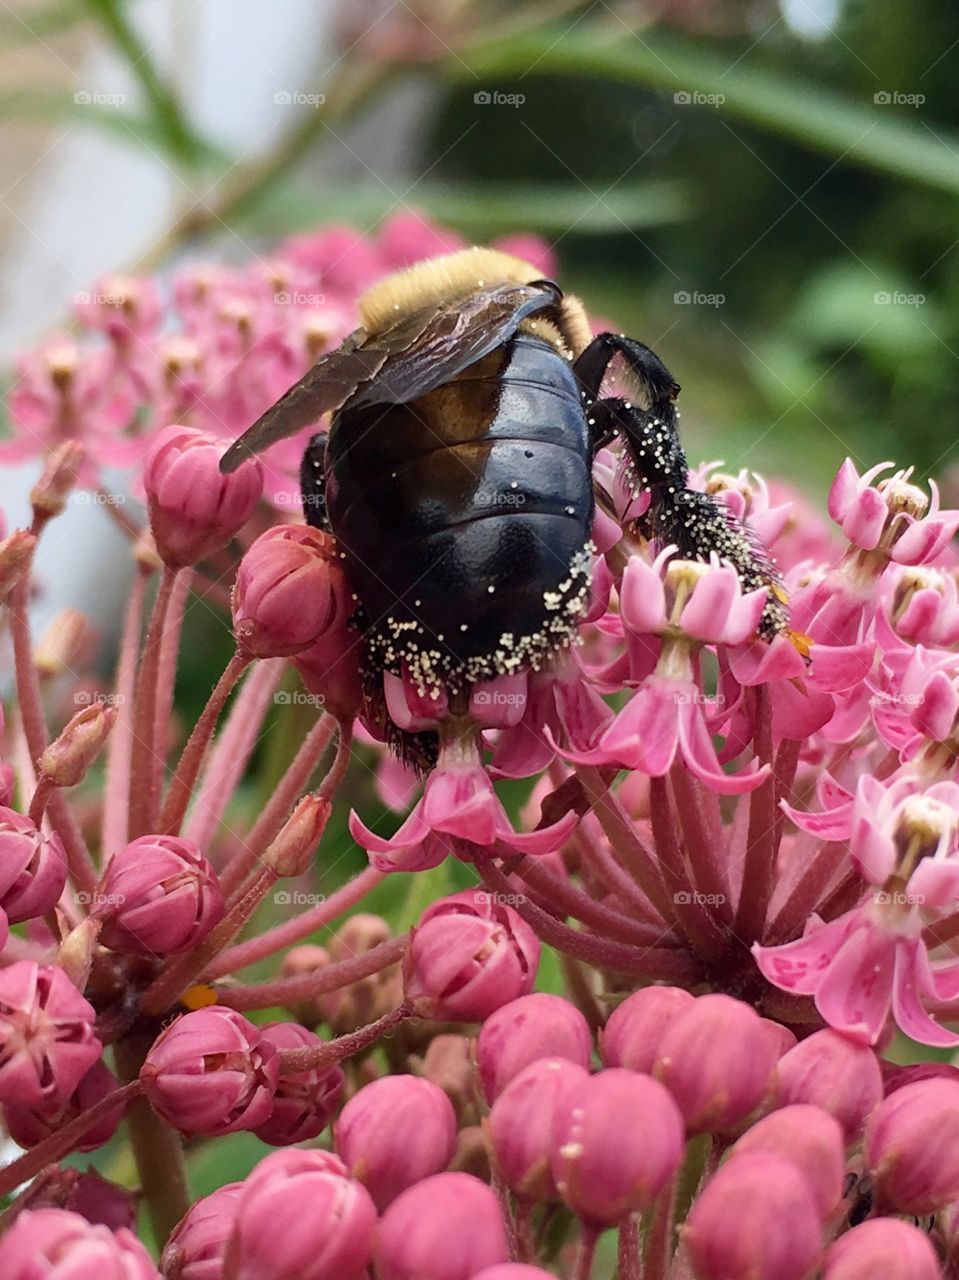 Buzz in the backyard 